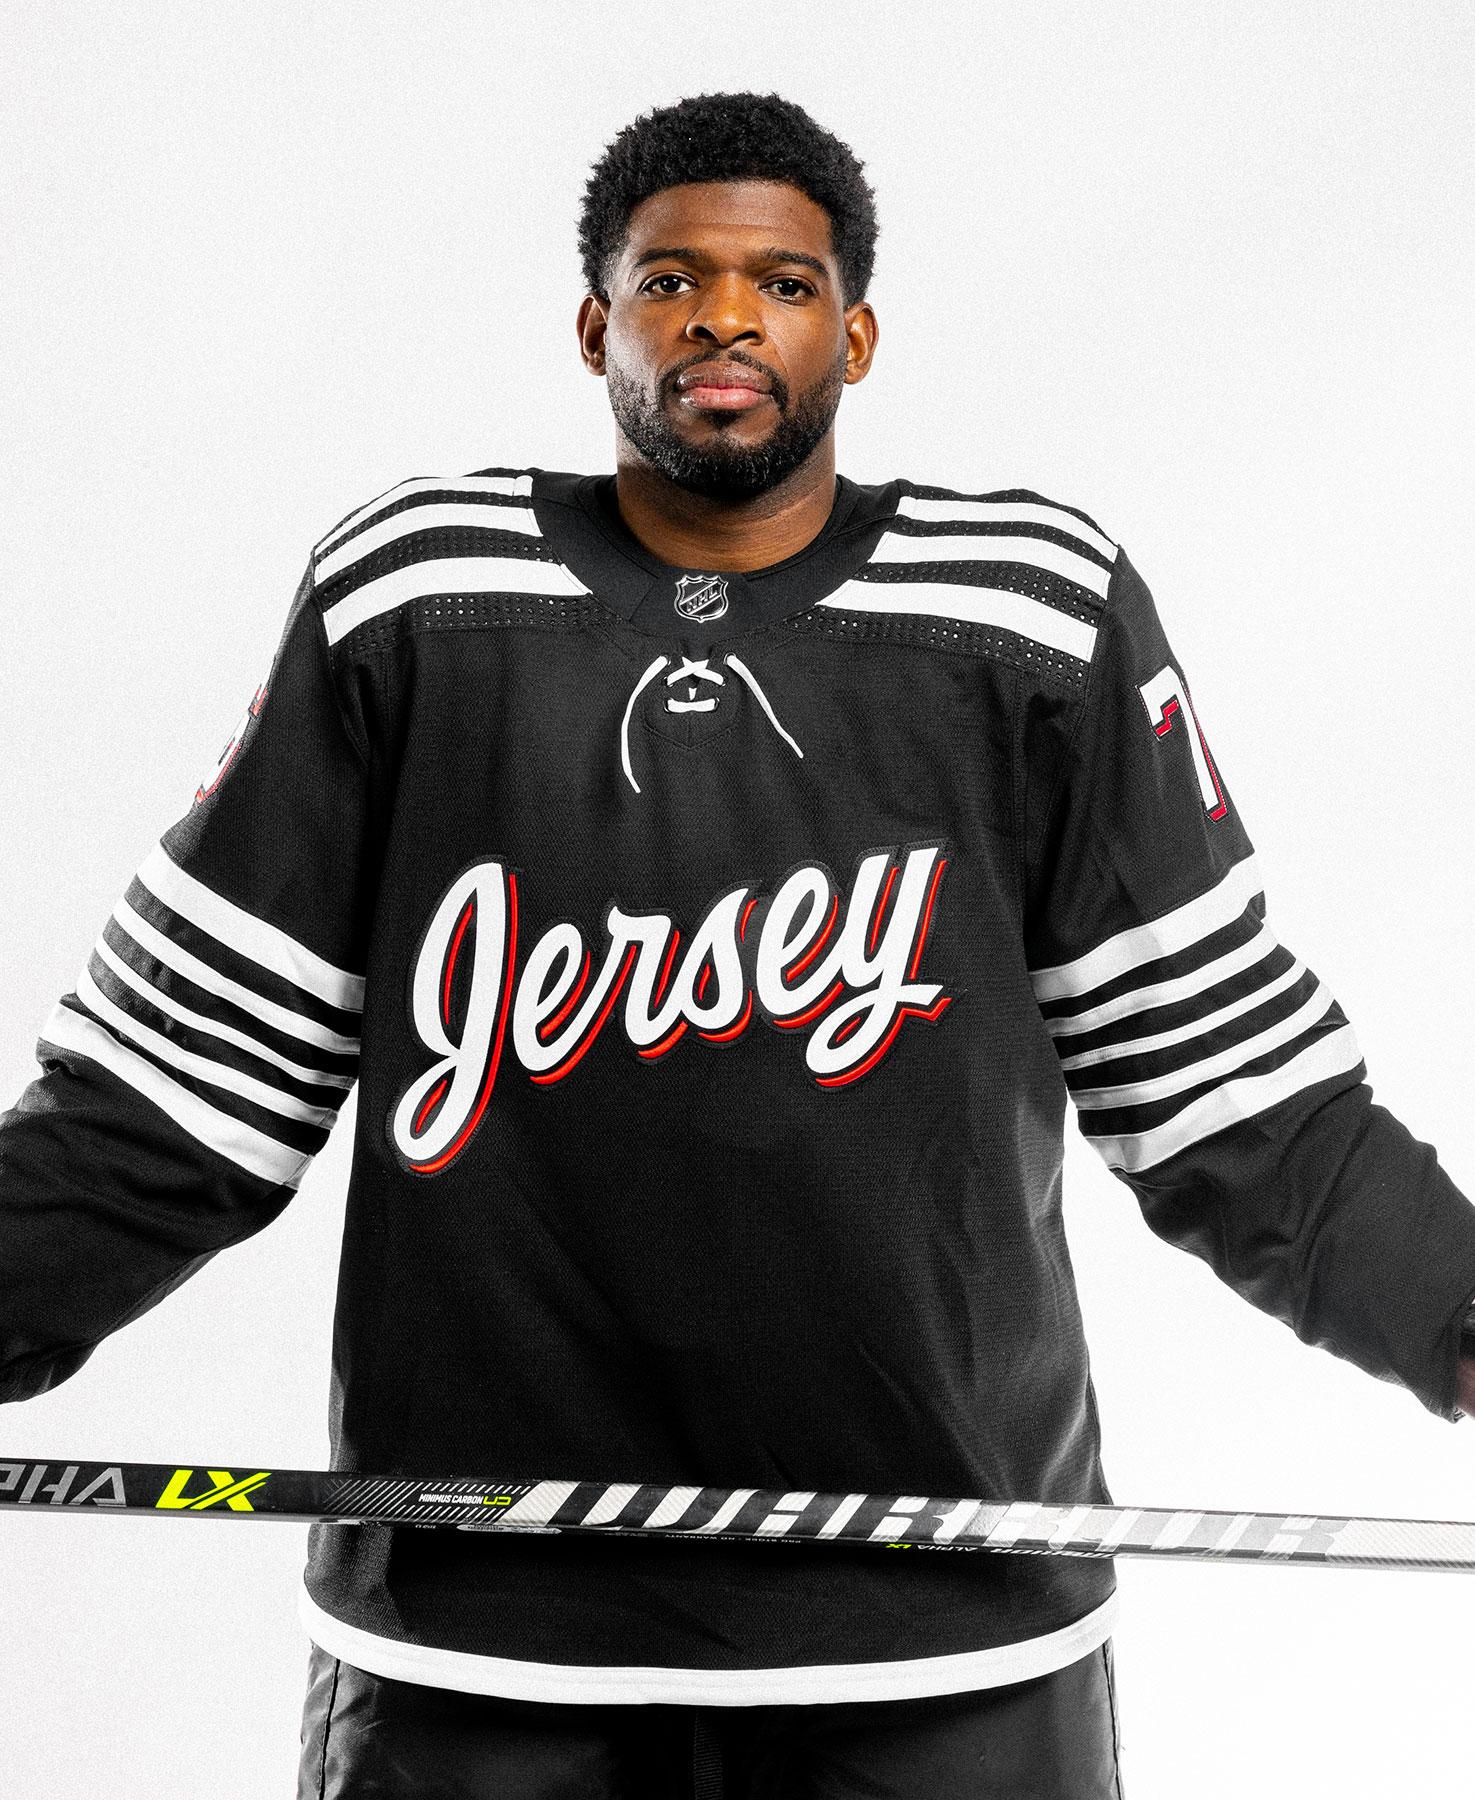 NHL: NJ Devils release new third jersey designed by Brodeur